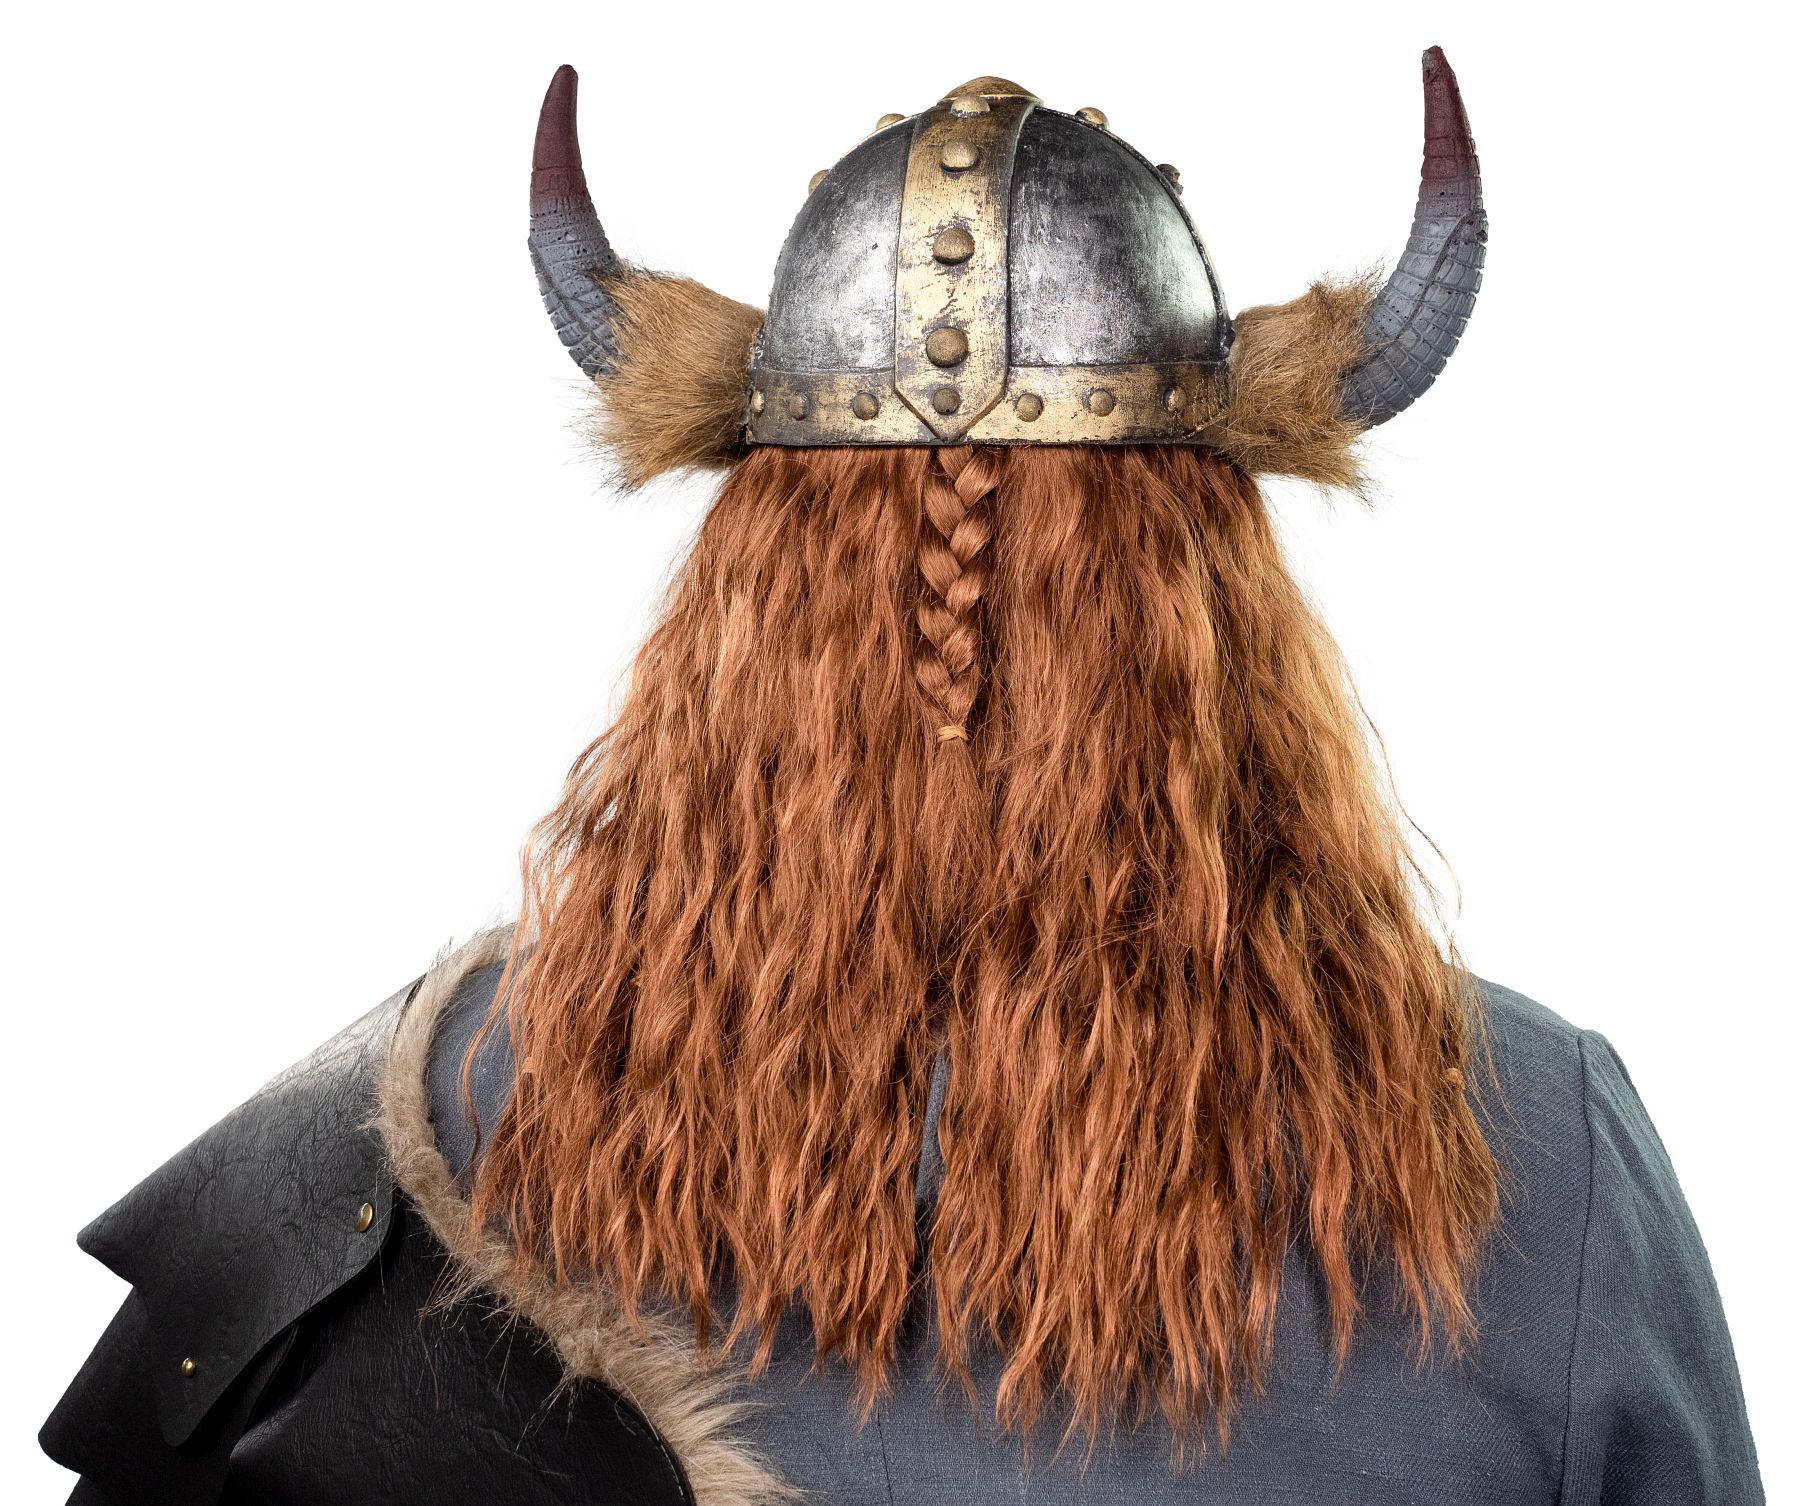 Viking helmet with fur trim